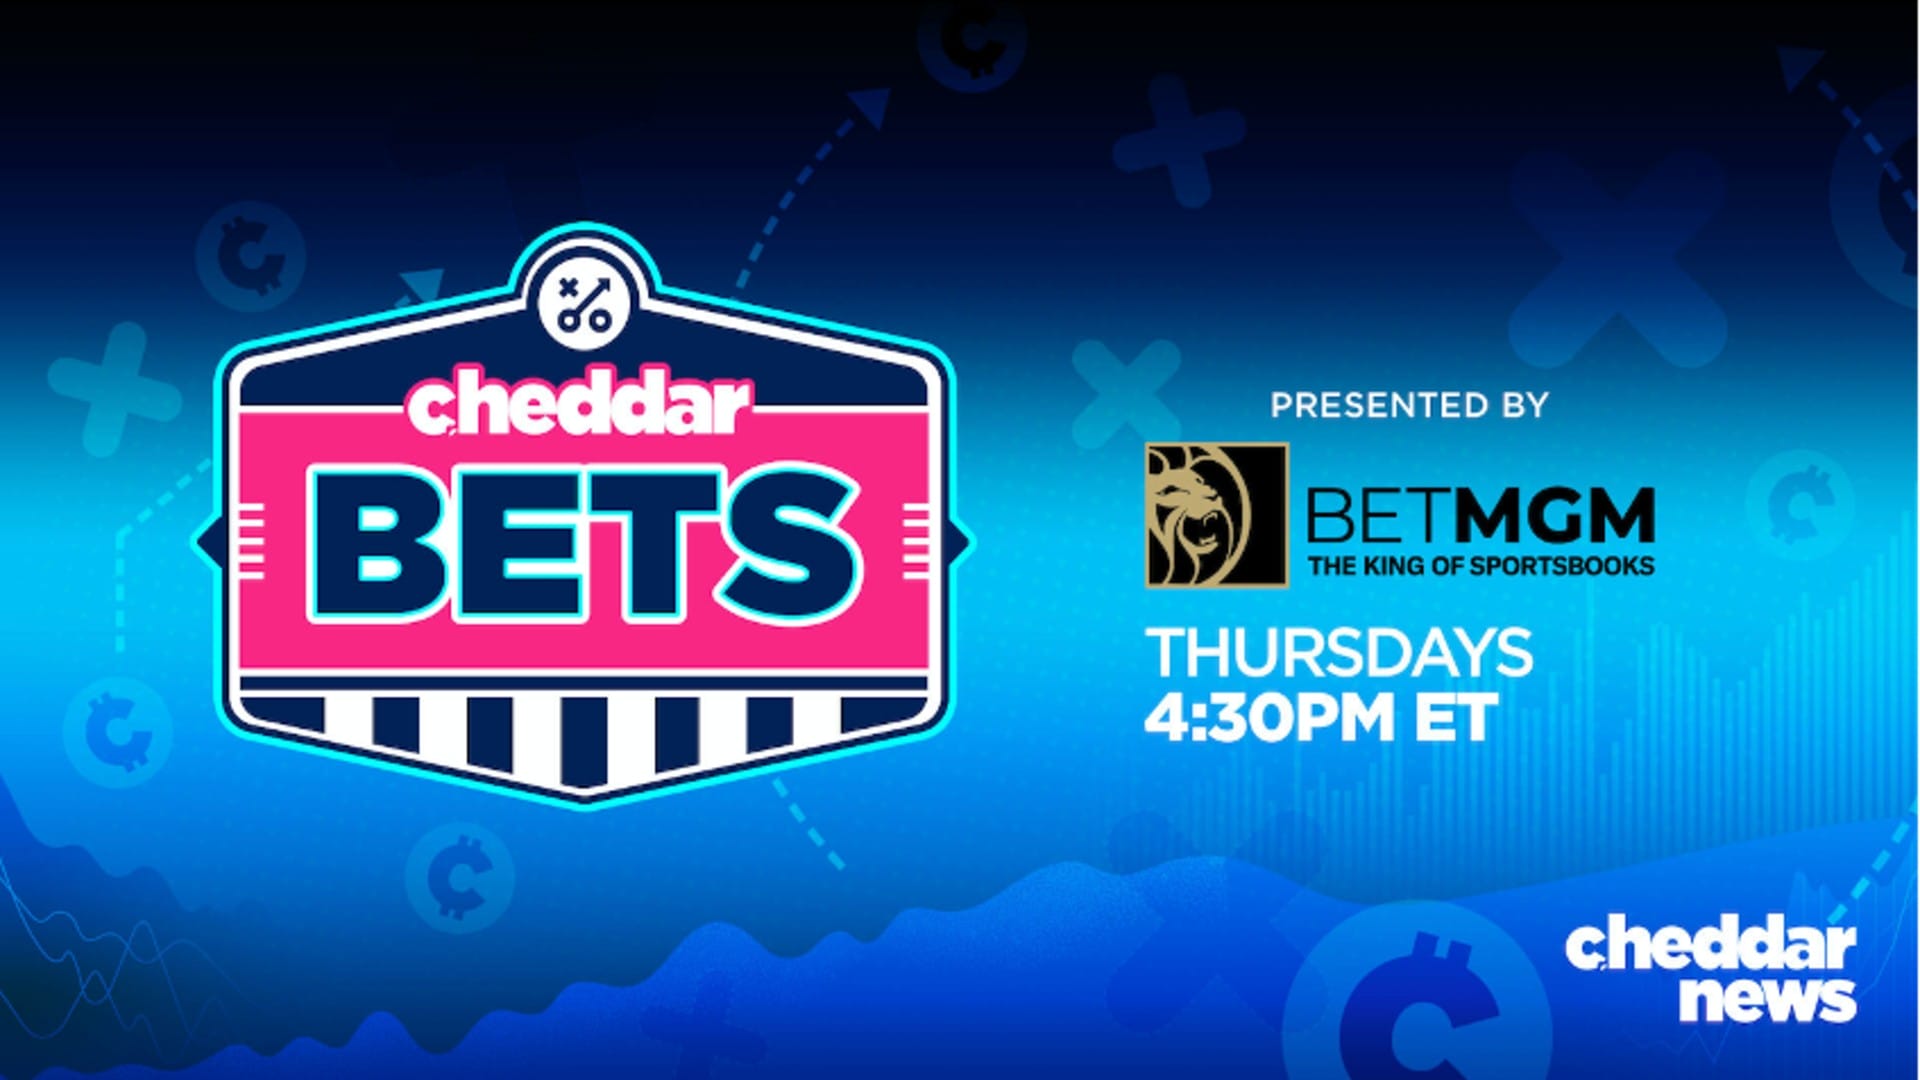 Cheddar Bets logo next to the BetMGM logo on a light blue background.